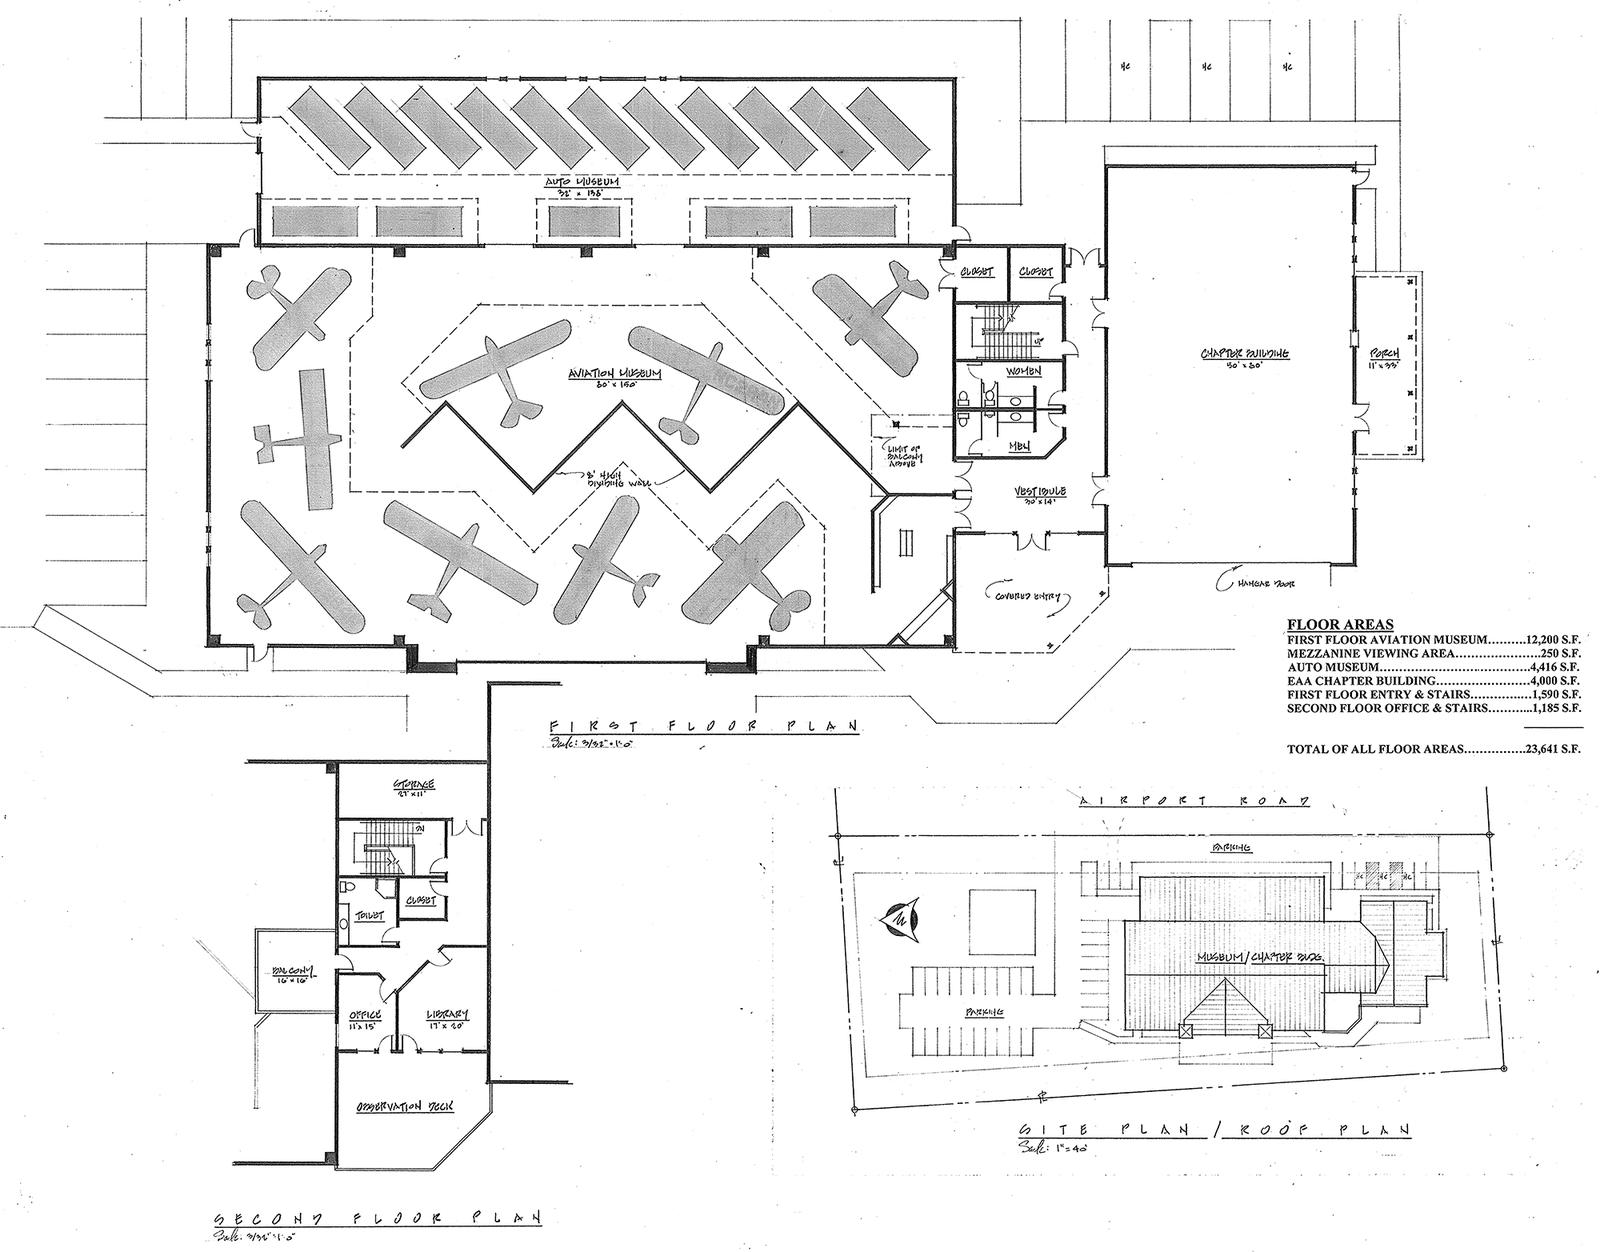 Proposed floor plan